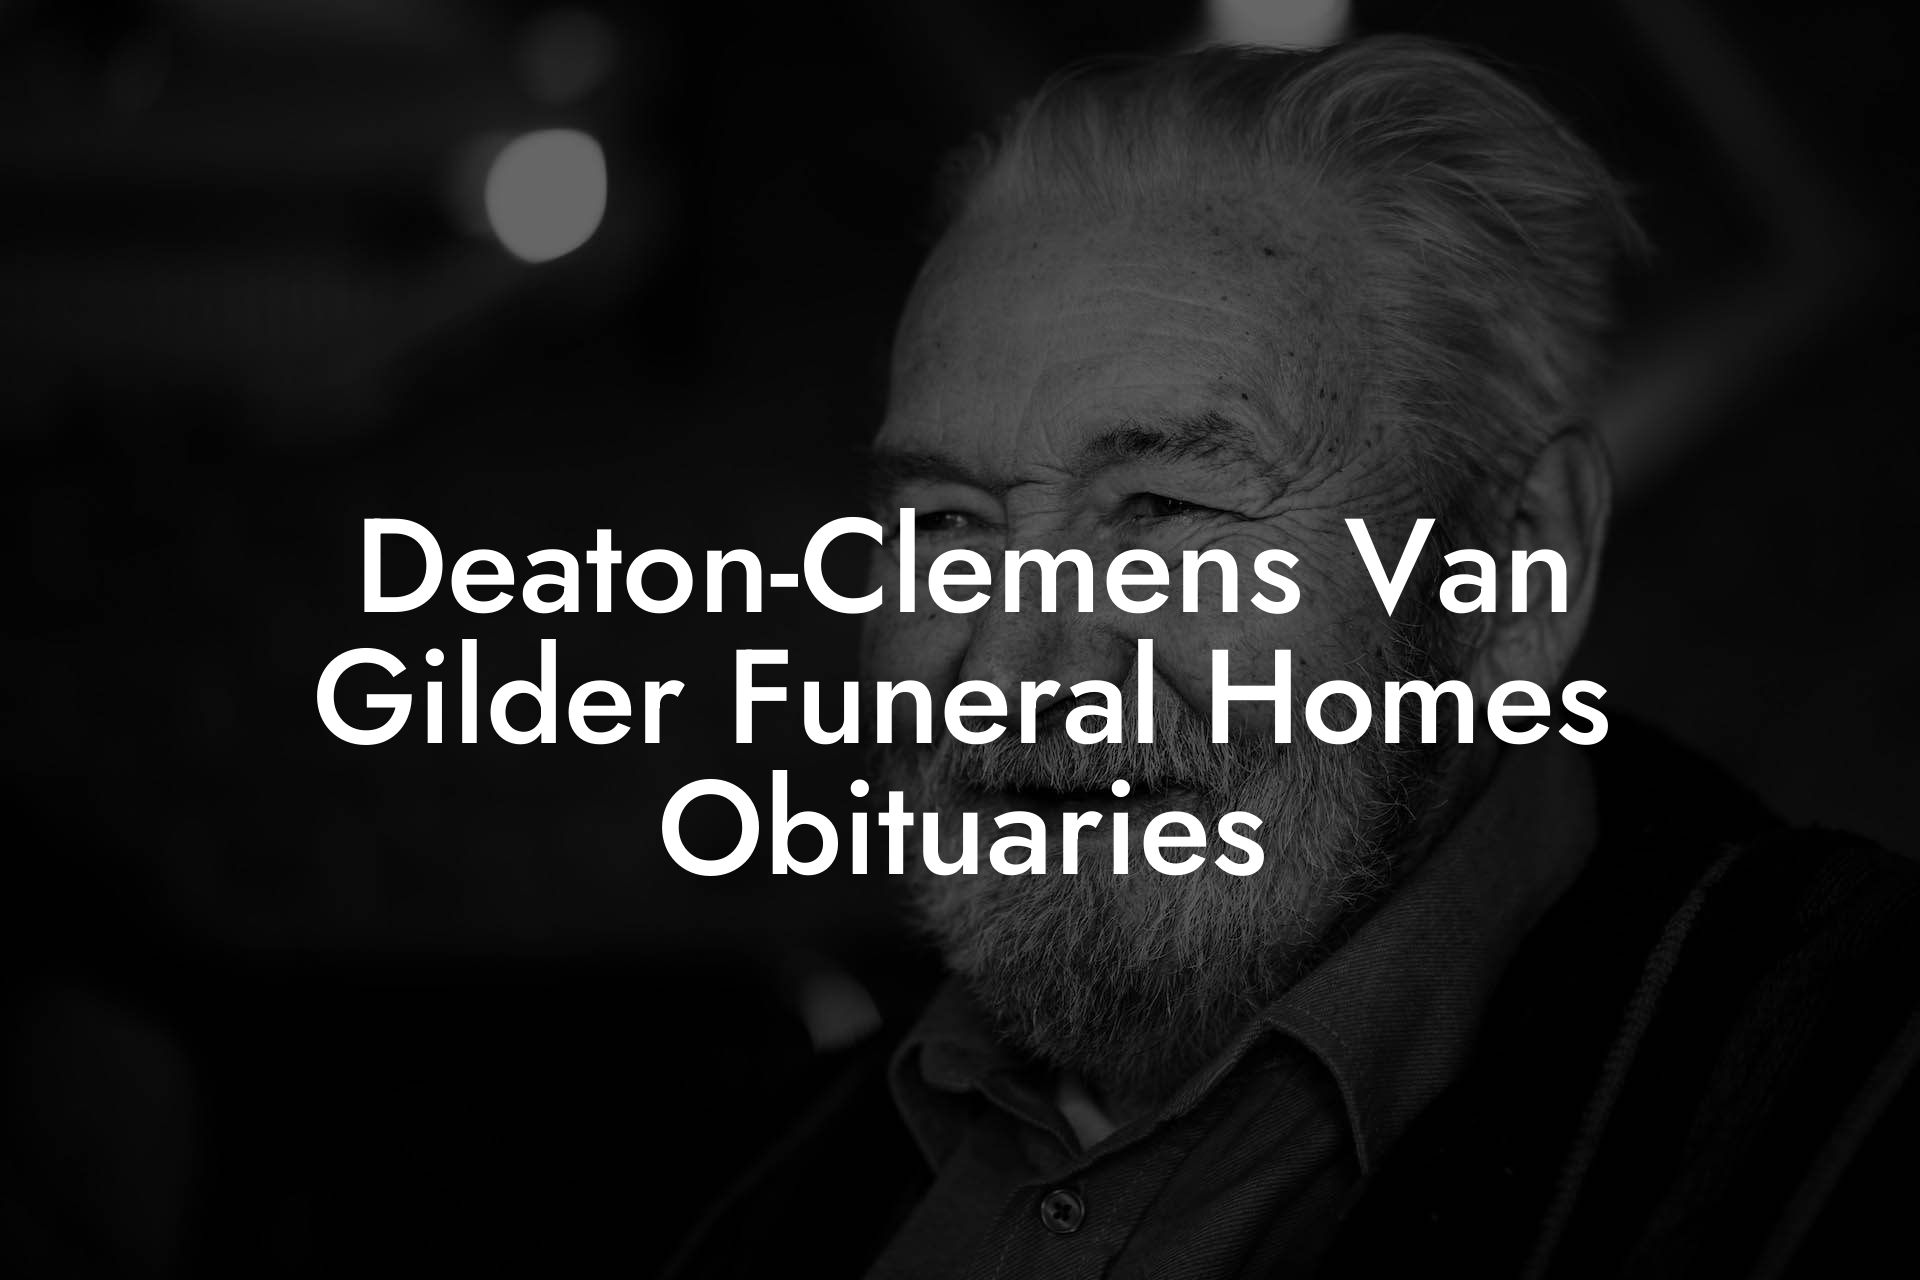 Deaton-Clemens Van Gilder Funeral Homes Obituaries